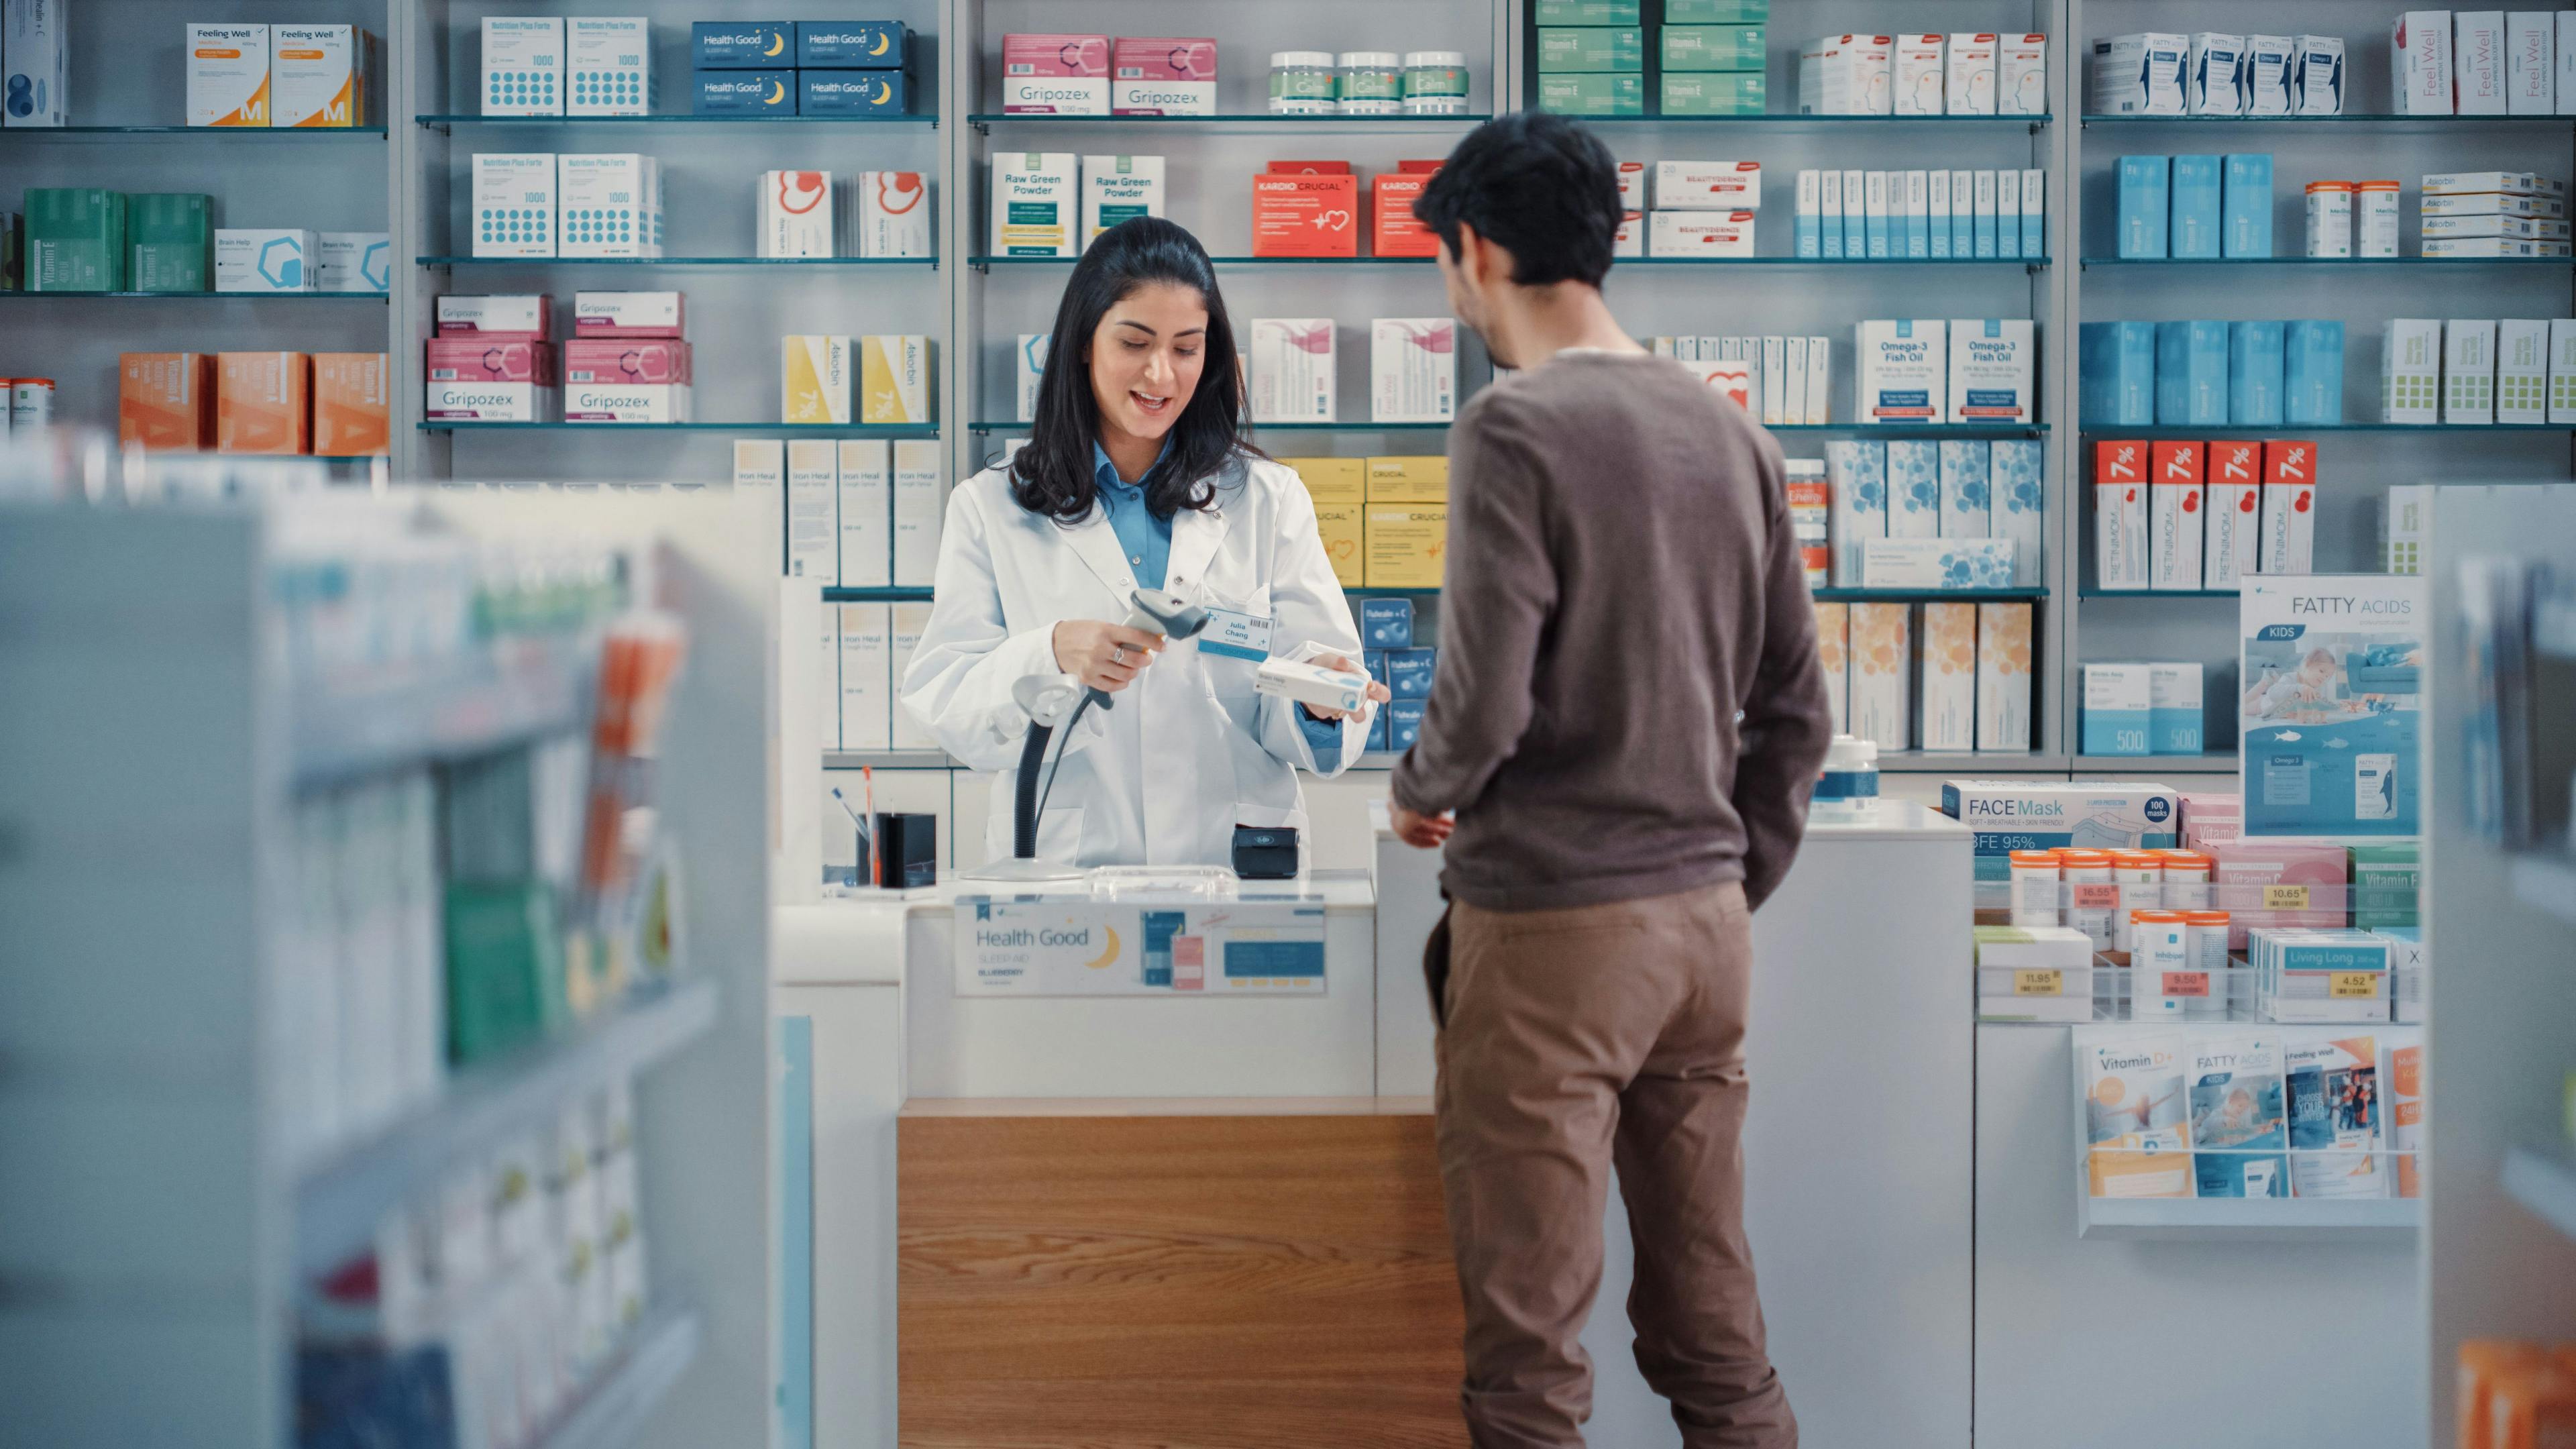 Pharmacy technician helping customer with prescription / Gorodenkoff - stock.adobe.com